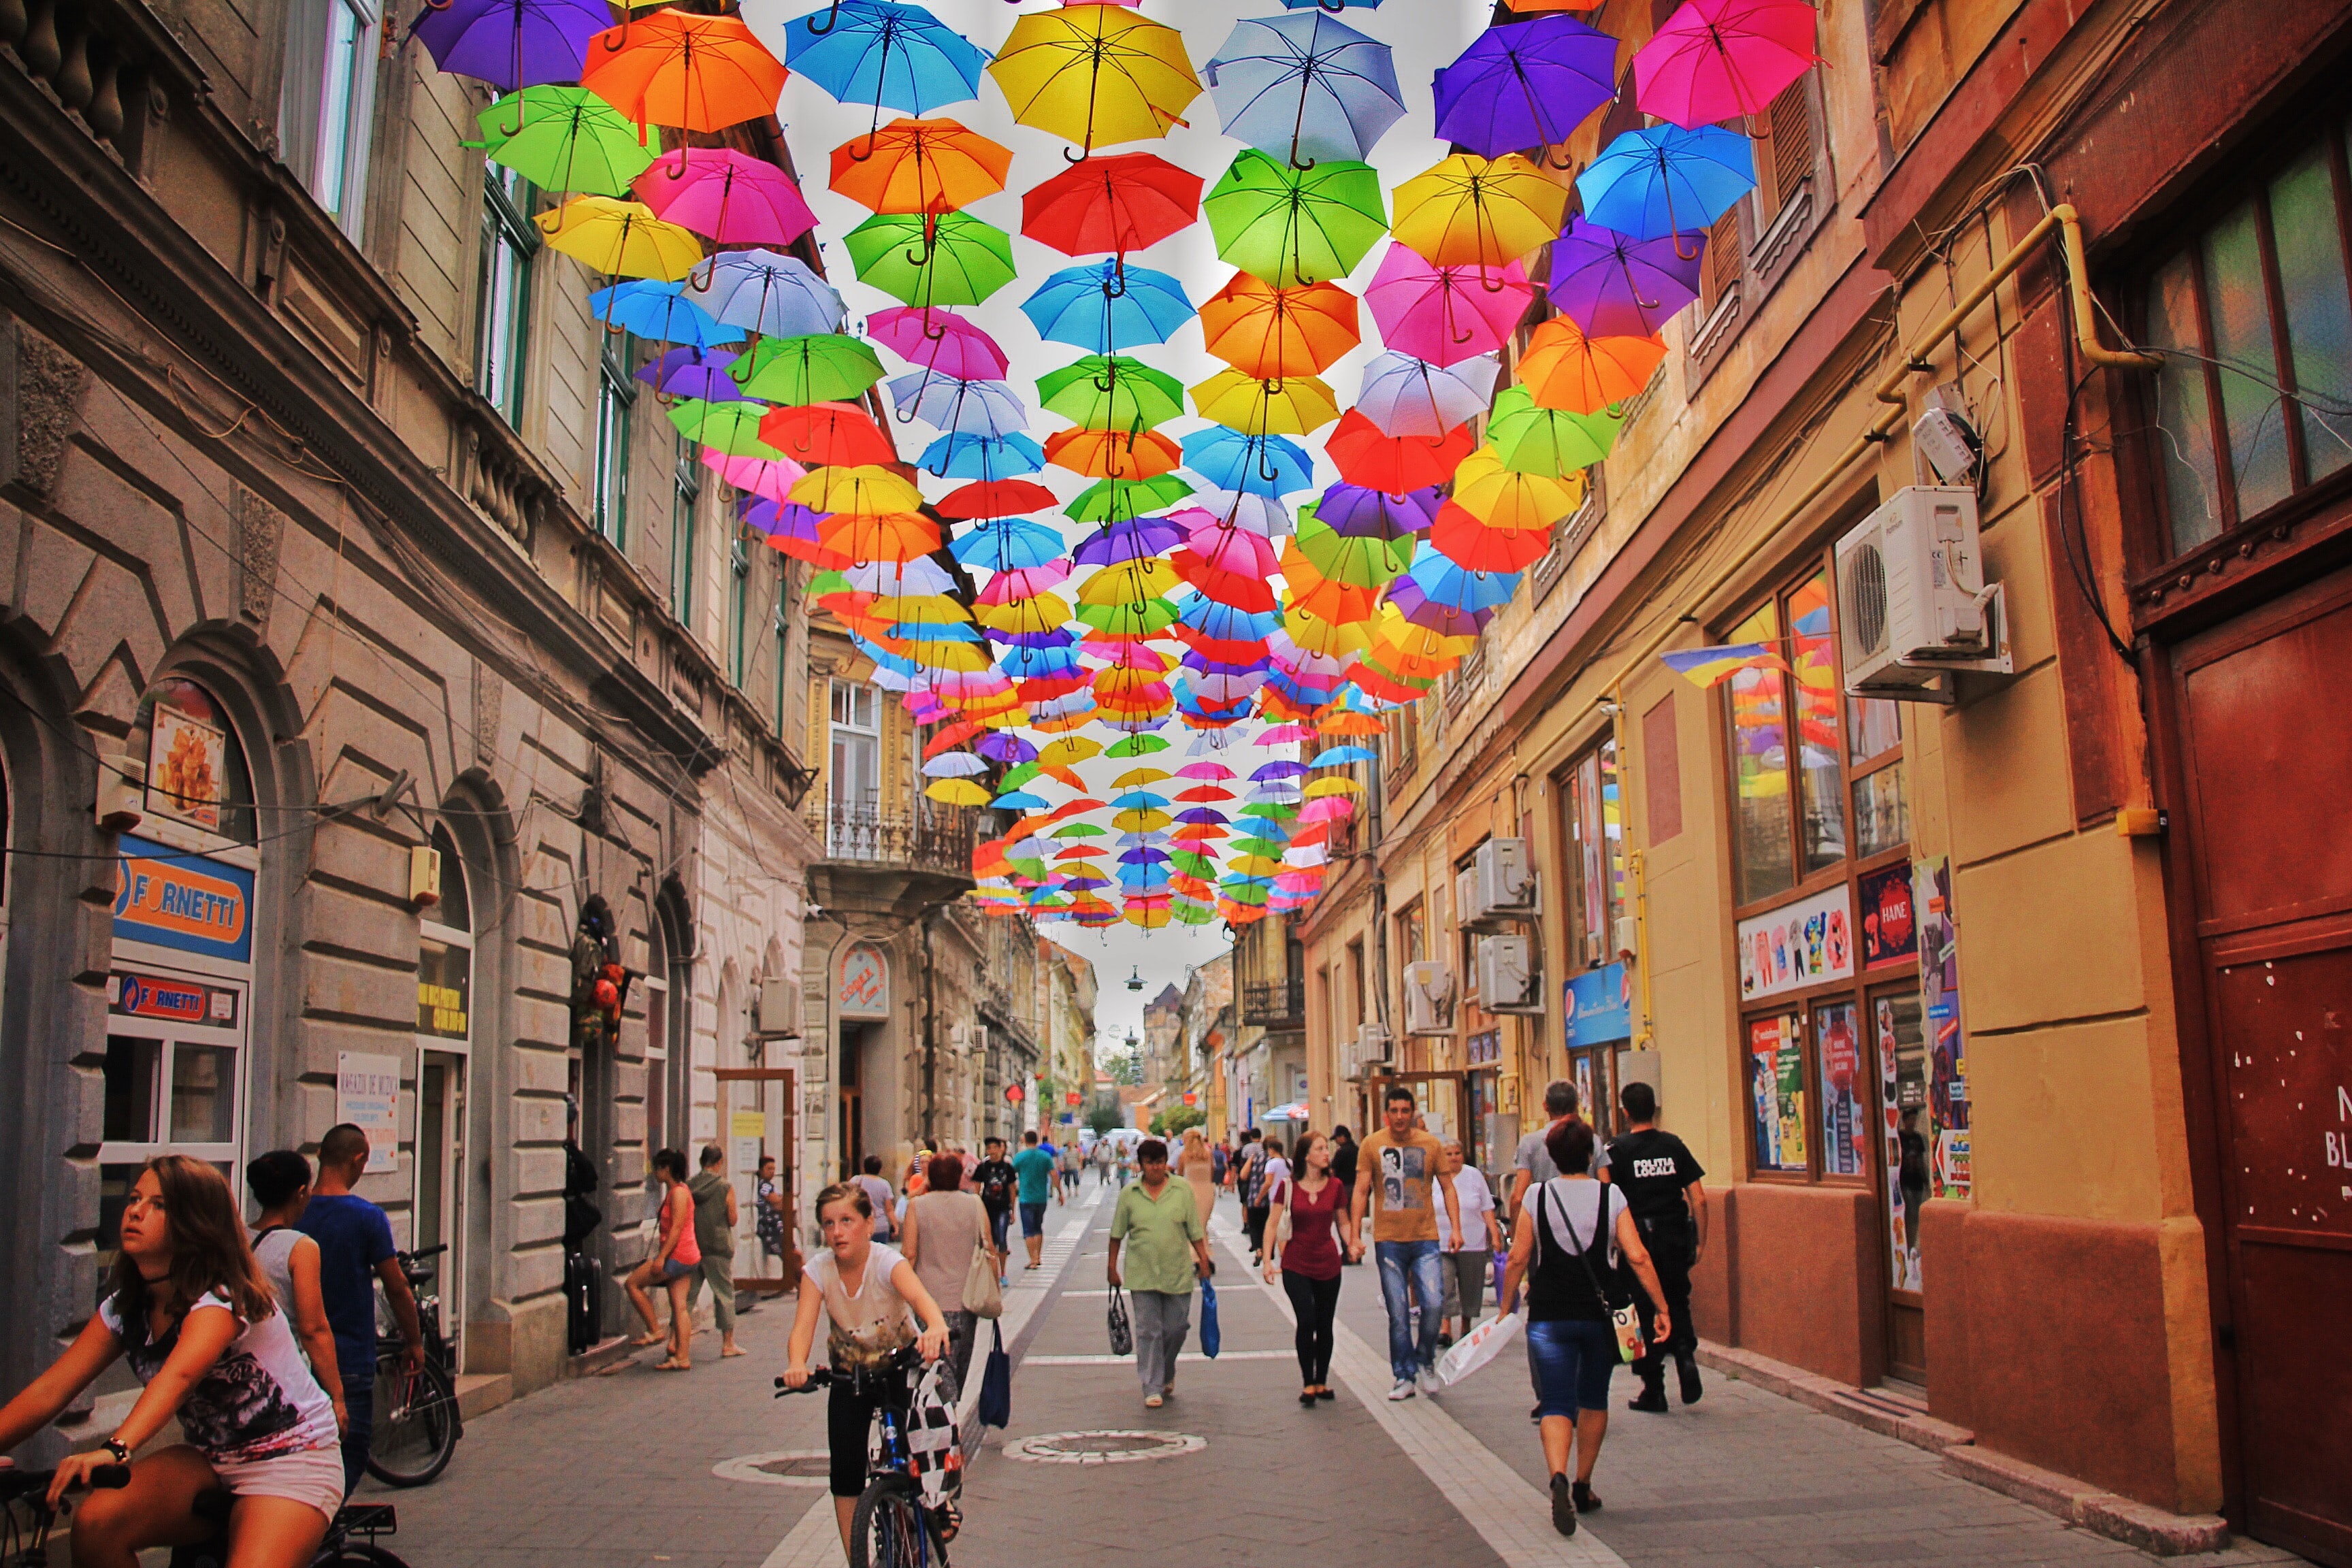 People walking down a colorful, Romanian street.